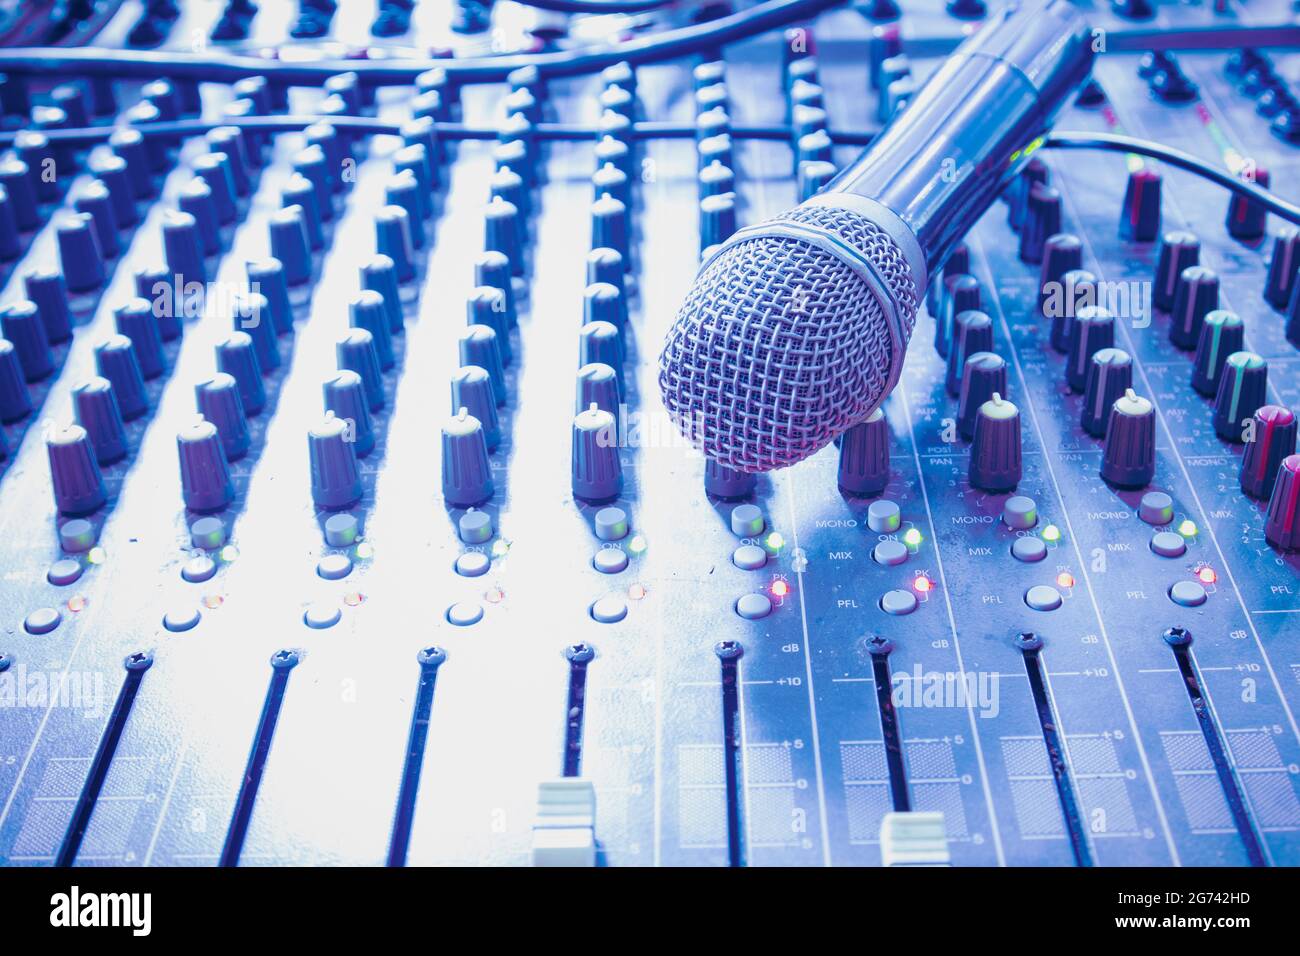 Kabelloses Mikrofon im Kontrollraum, kühle Farbtöne. Online-Konferenz-/Studienausrüstung. Stockfoto